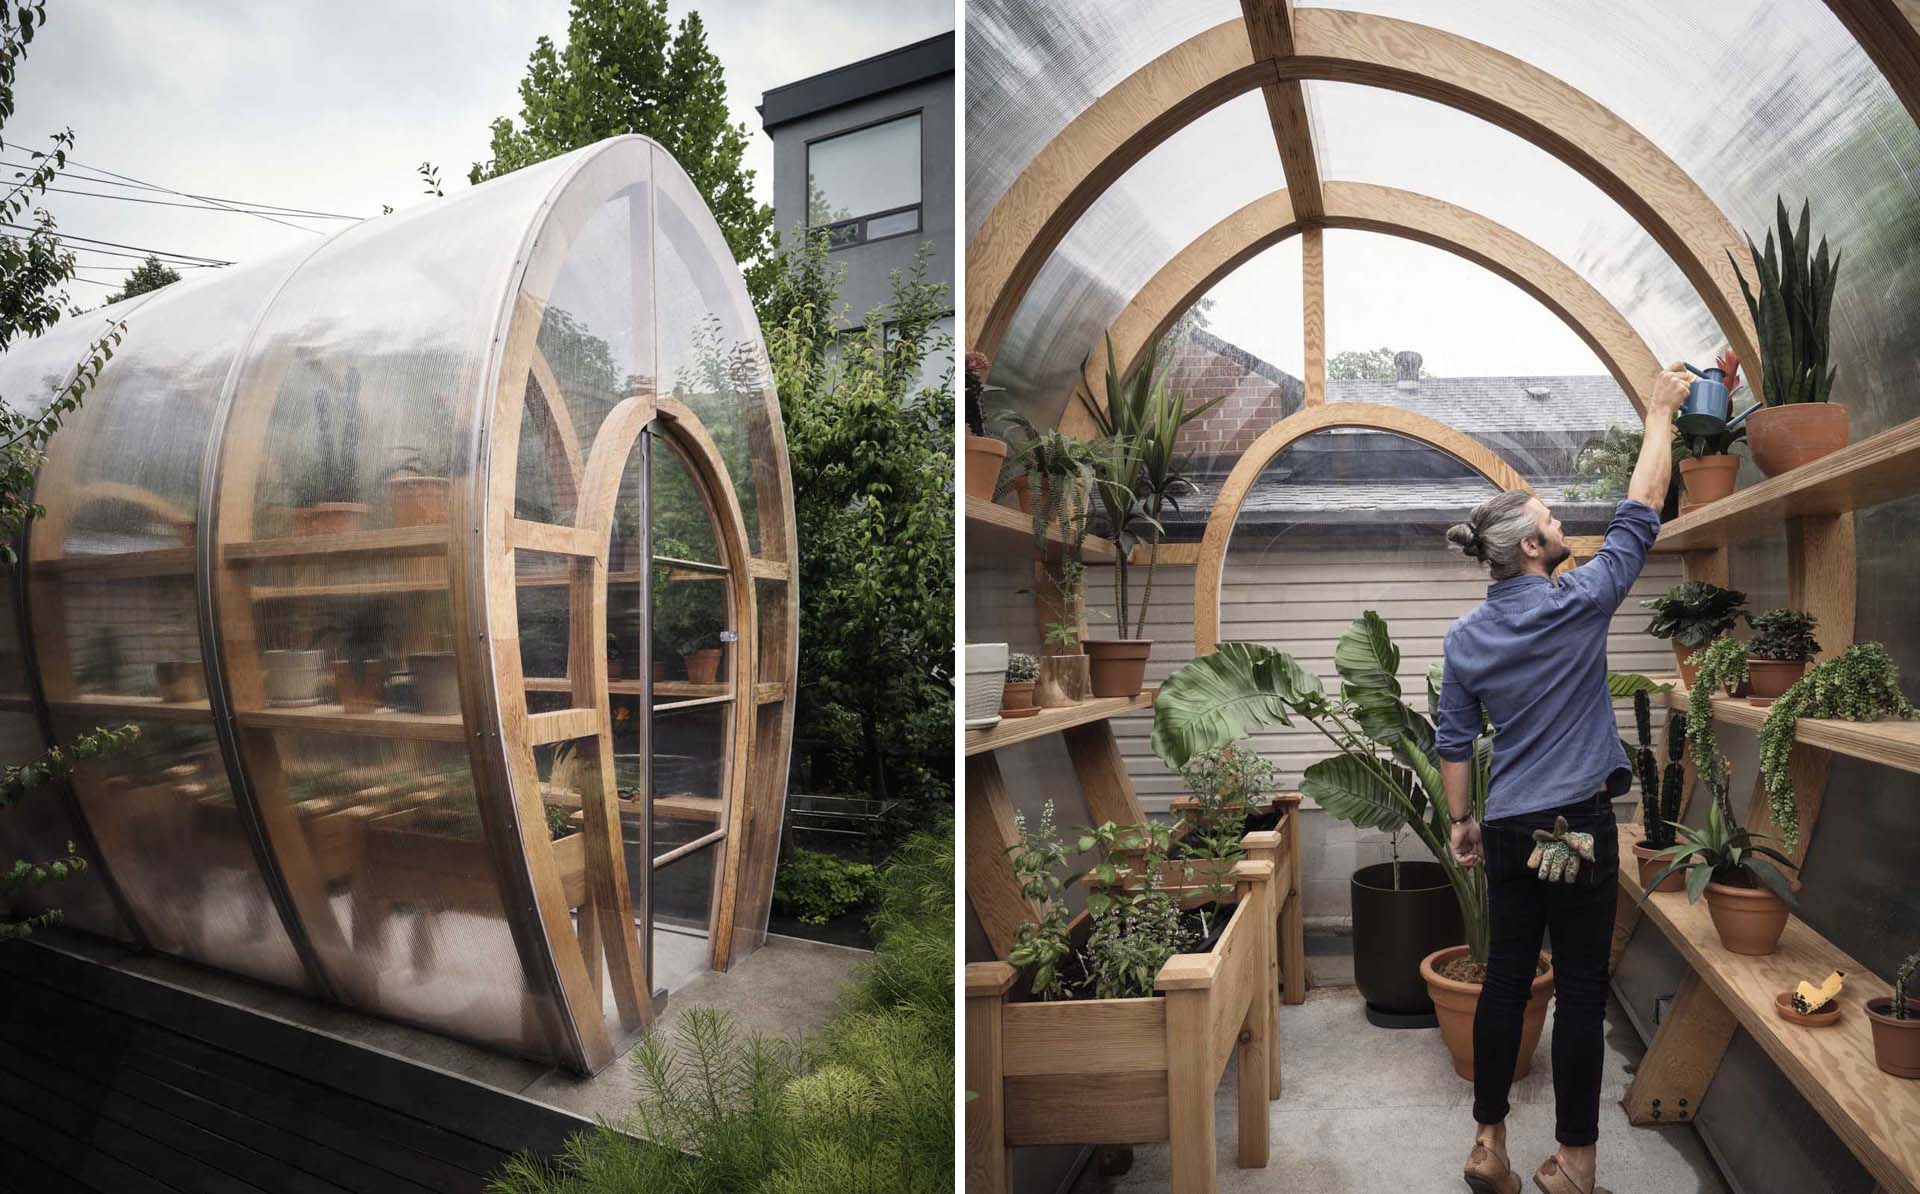 A backyard with a modern and modular greenhouse design.